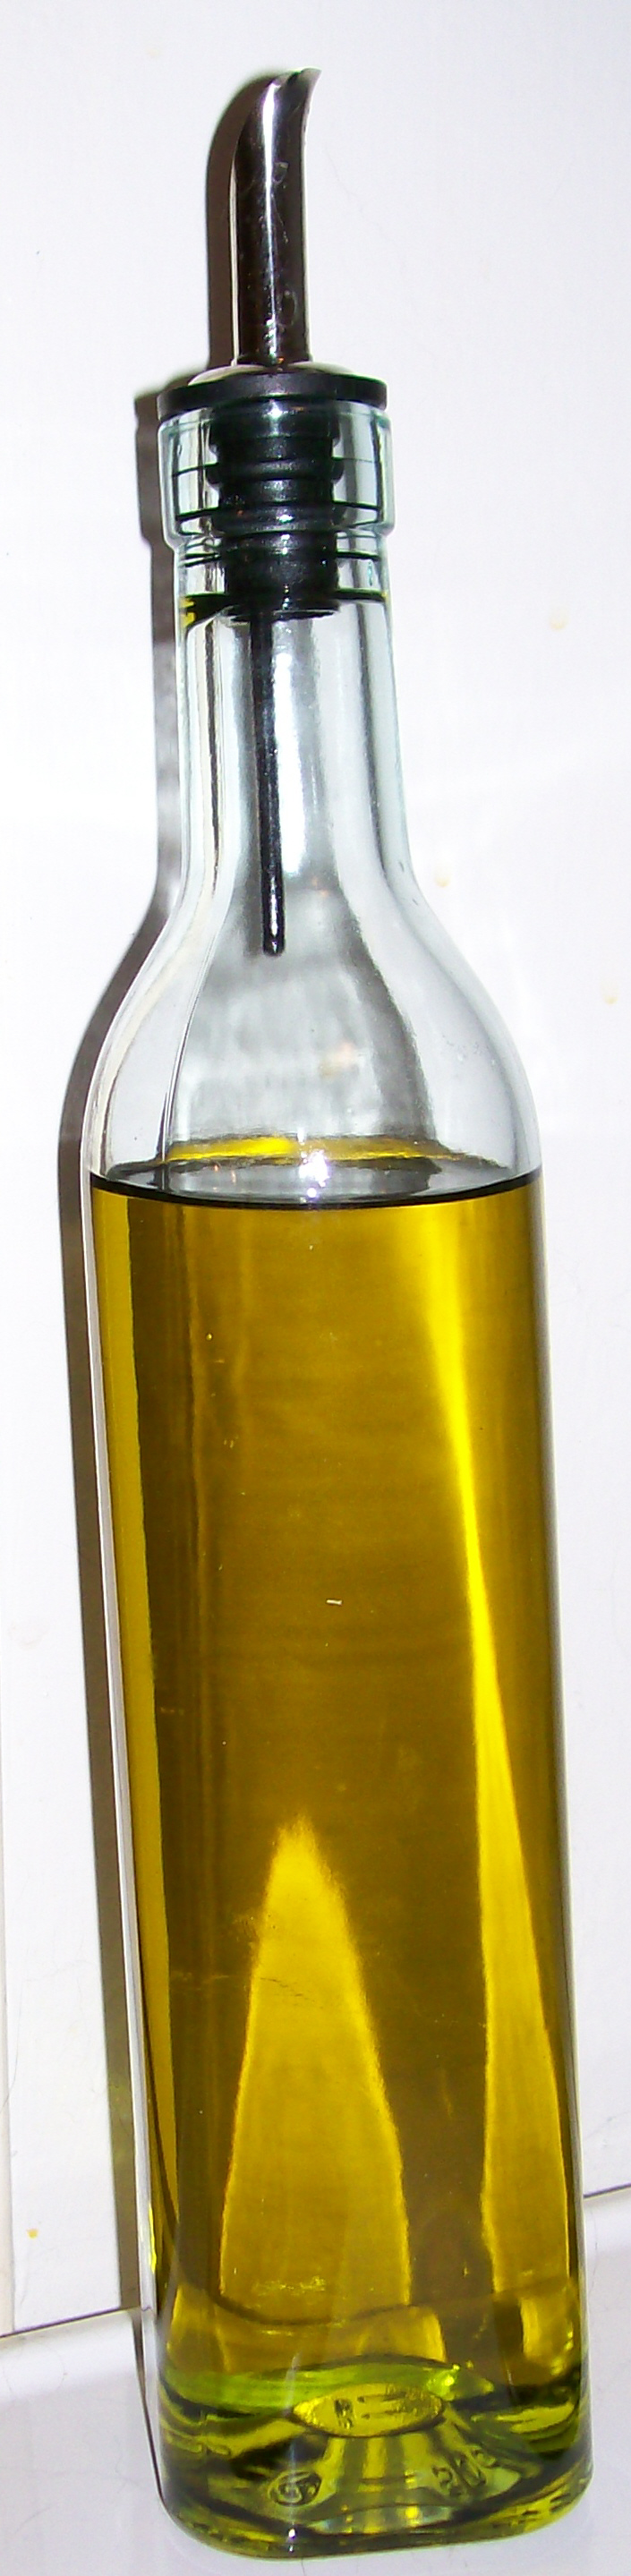 Olive oil bottle by MysticrainbowStock on DeviantArt